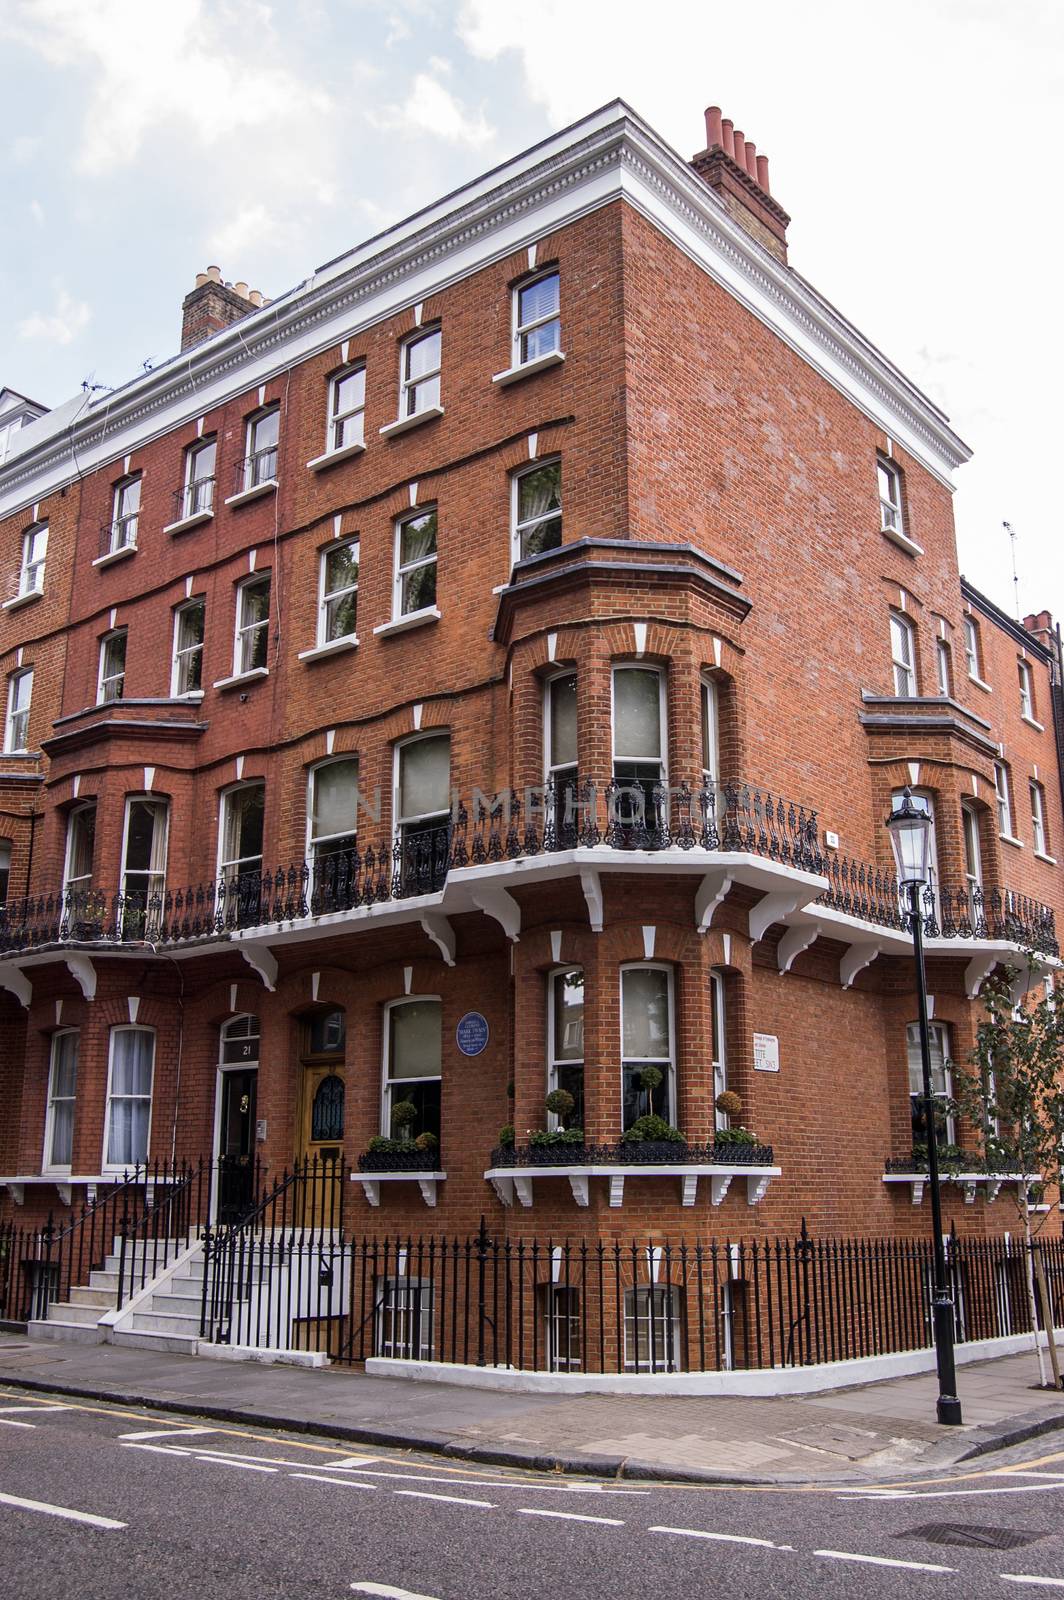 Historic Home of Mark Twain, London by BasPhoto